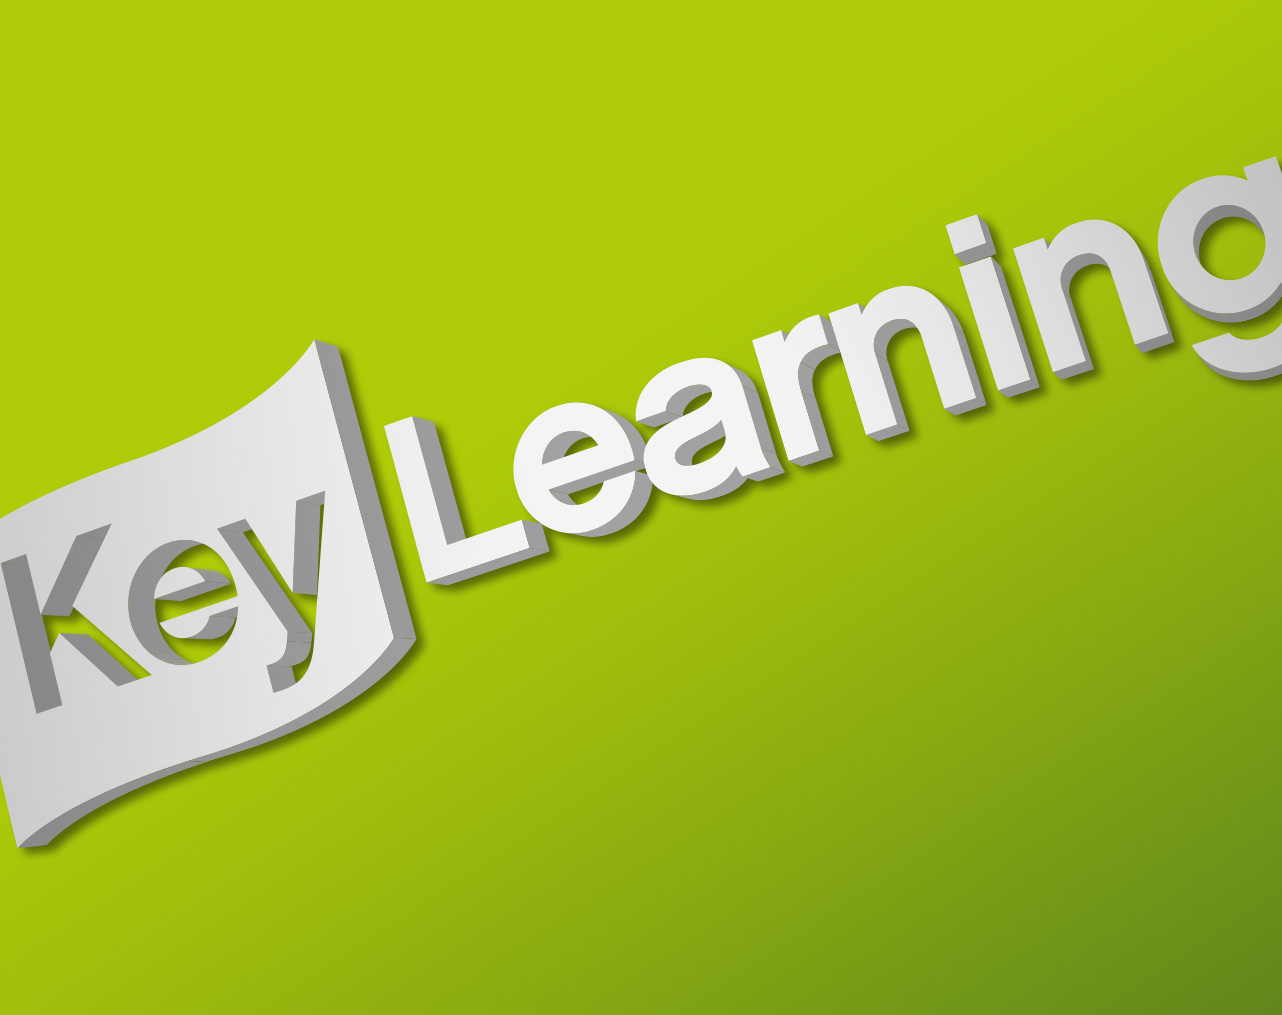 key_learning_premises_04.jpg